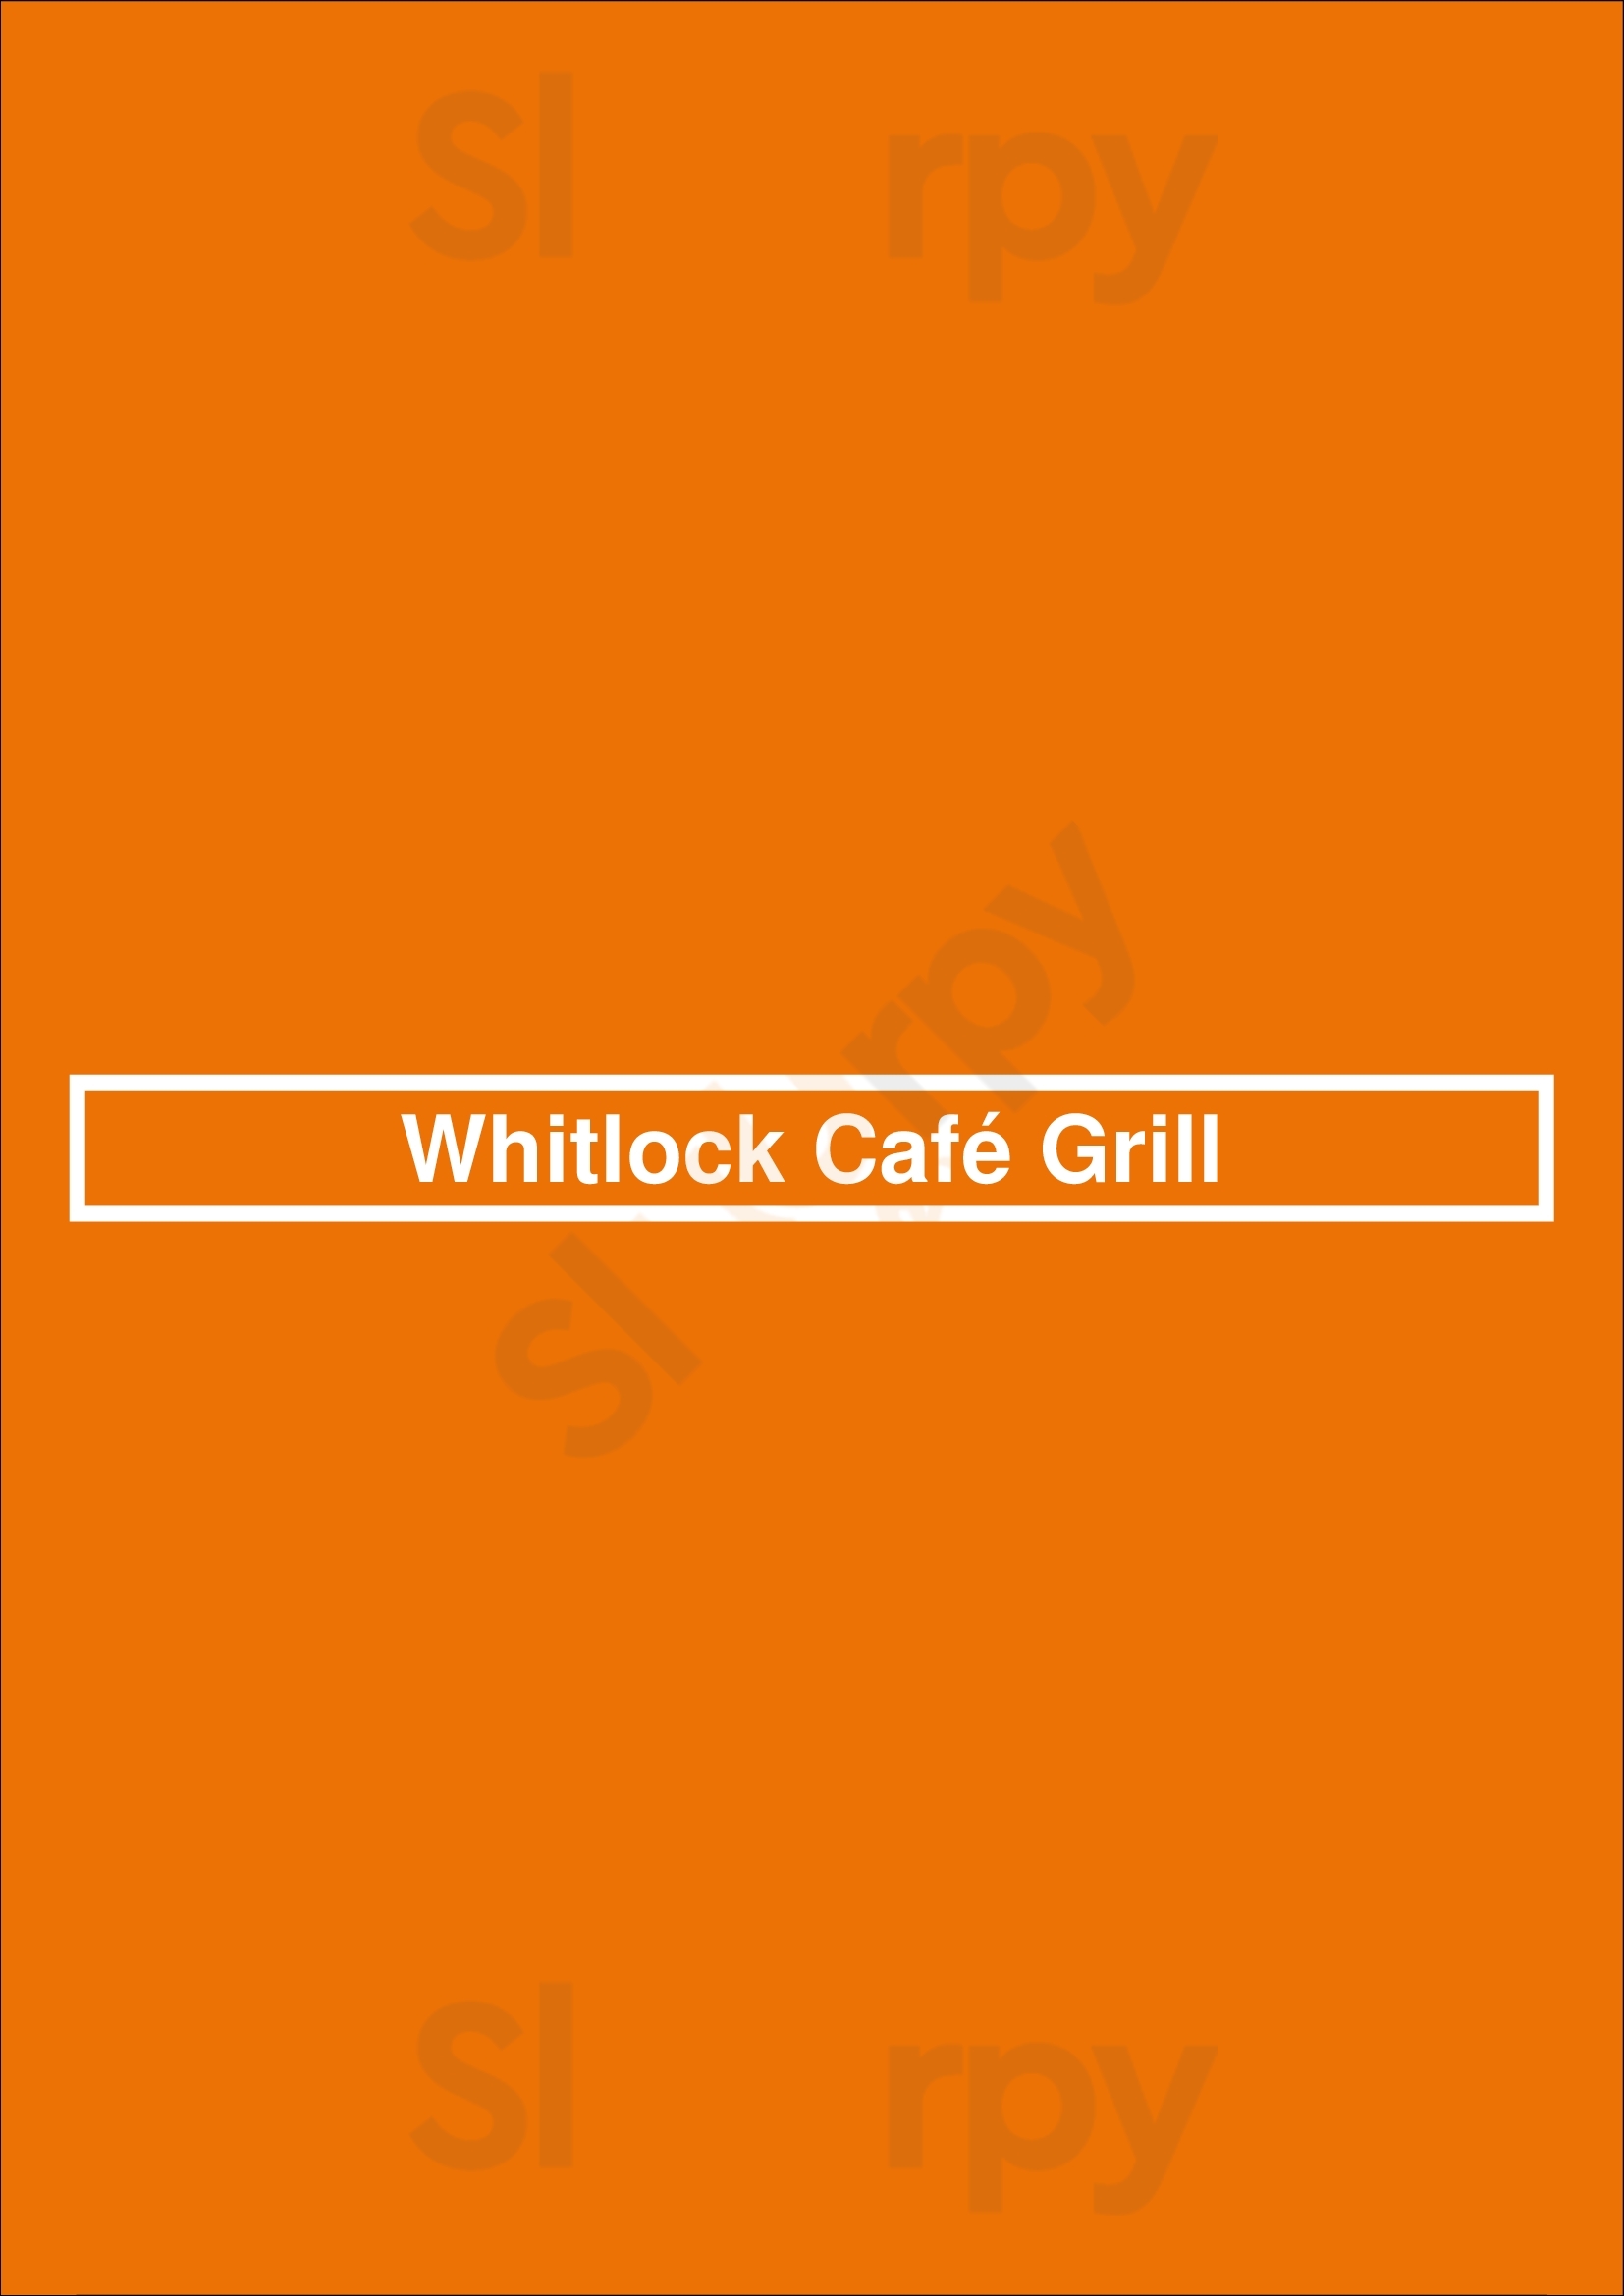 Whitlock Café Grill Bruxelles Menu - 1